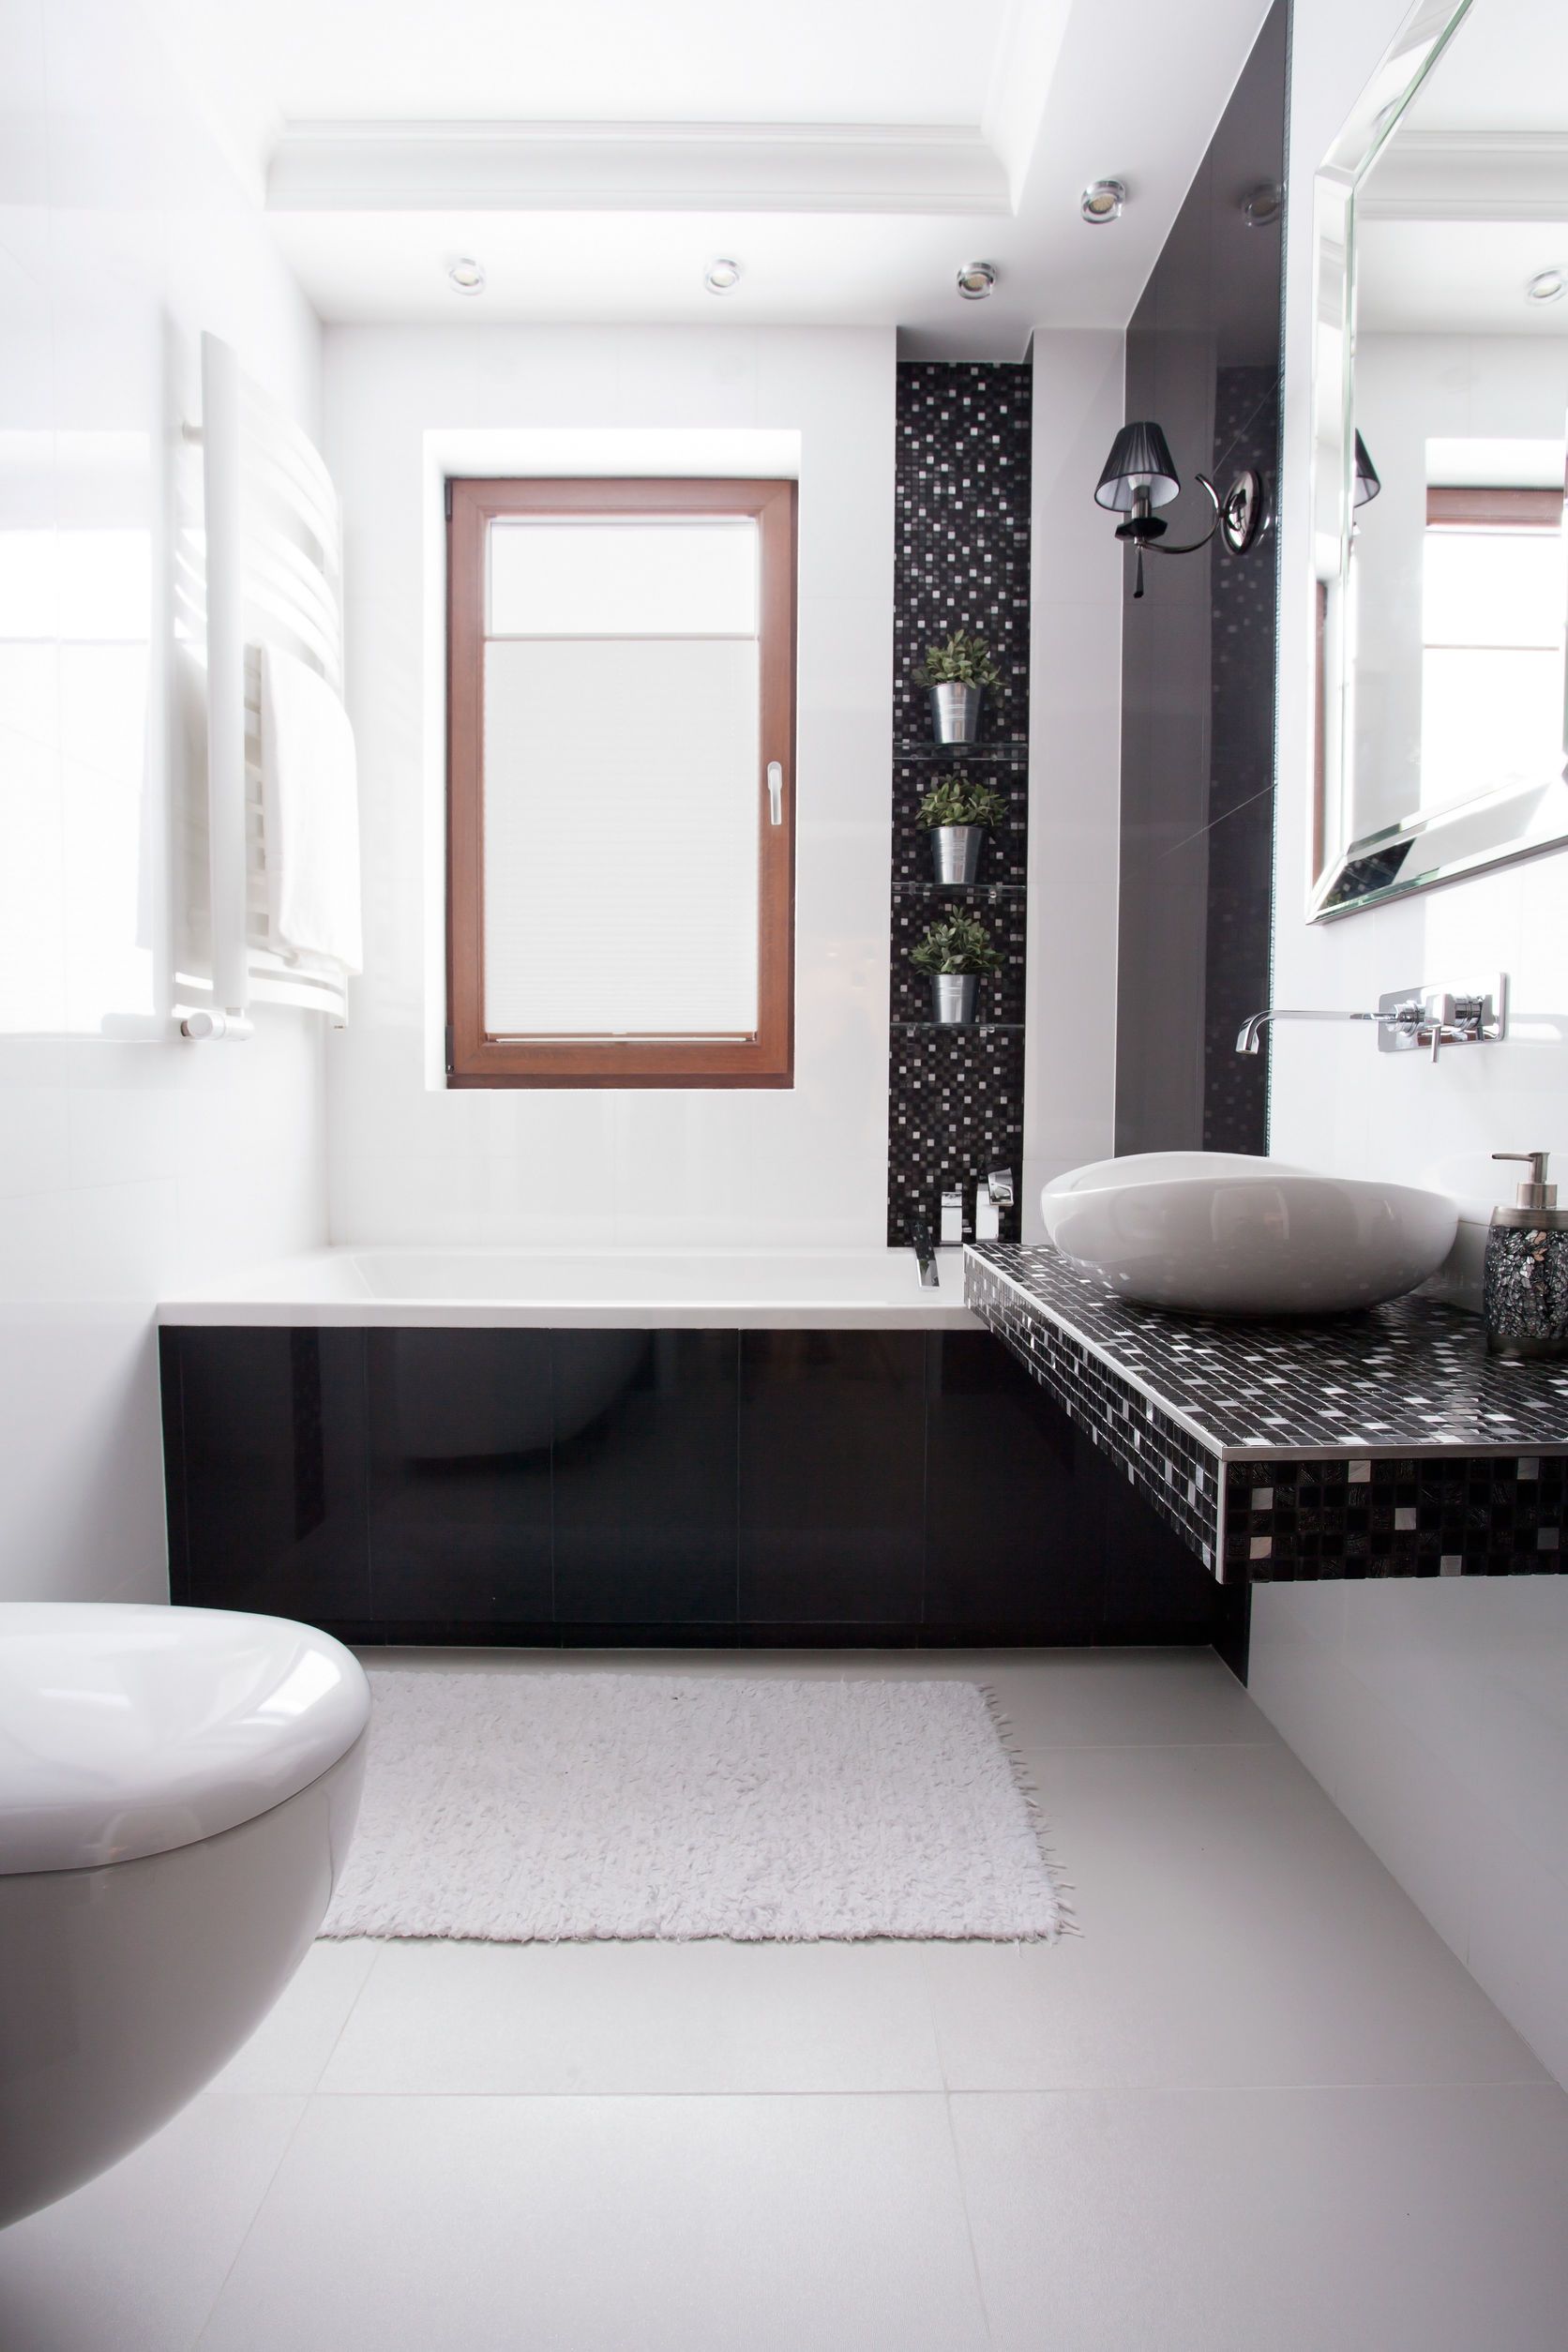 Luxury washroom in black and white design